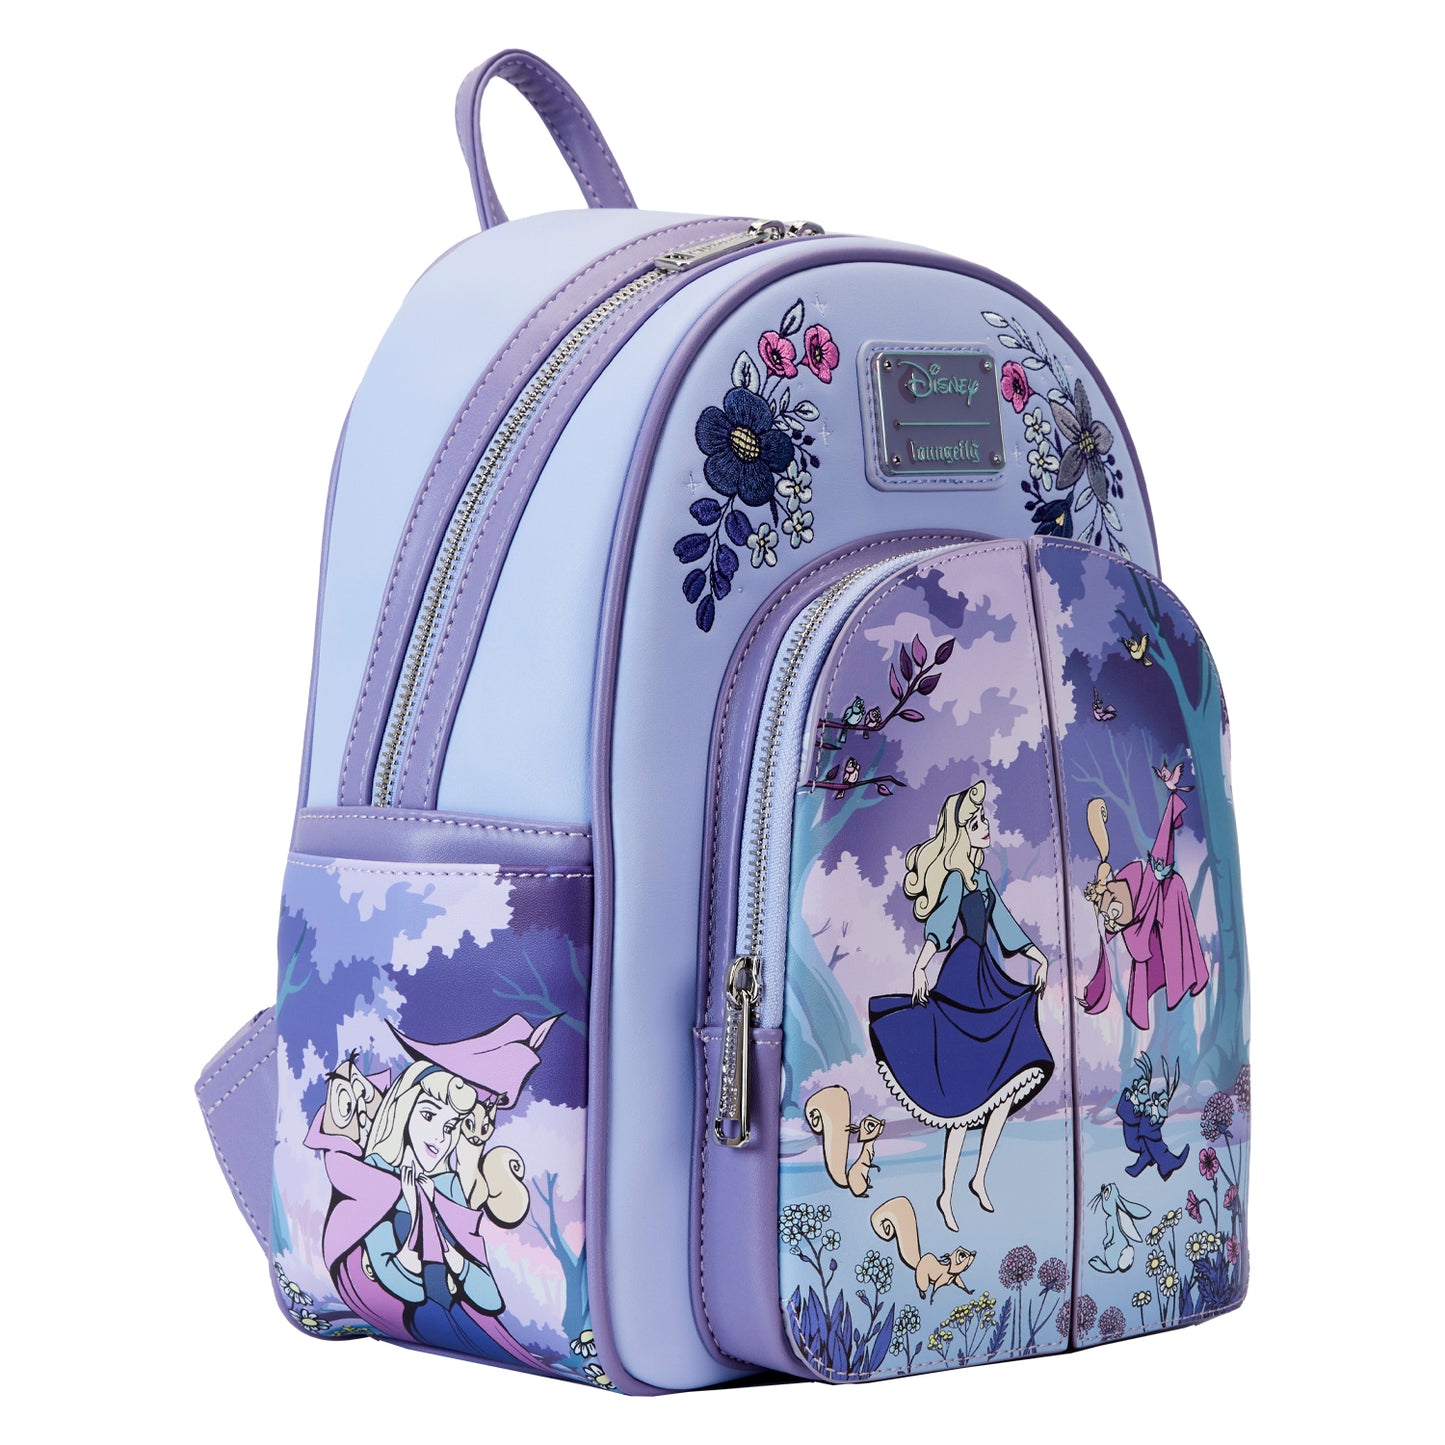 Sleeping Beauty 65th Anniversary Scene Mini Backpack